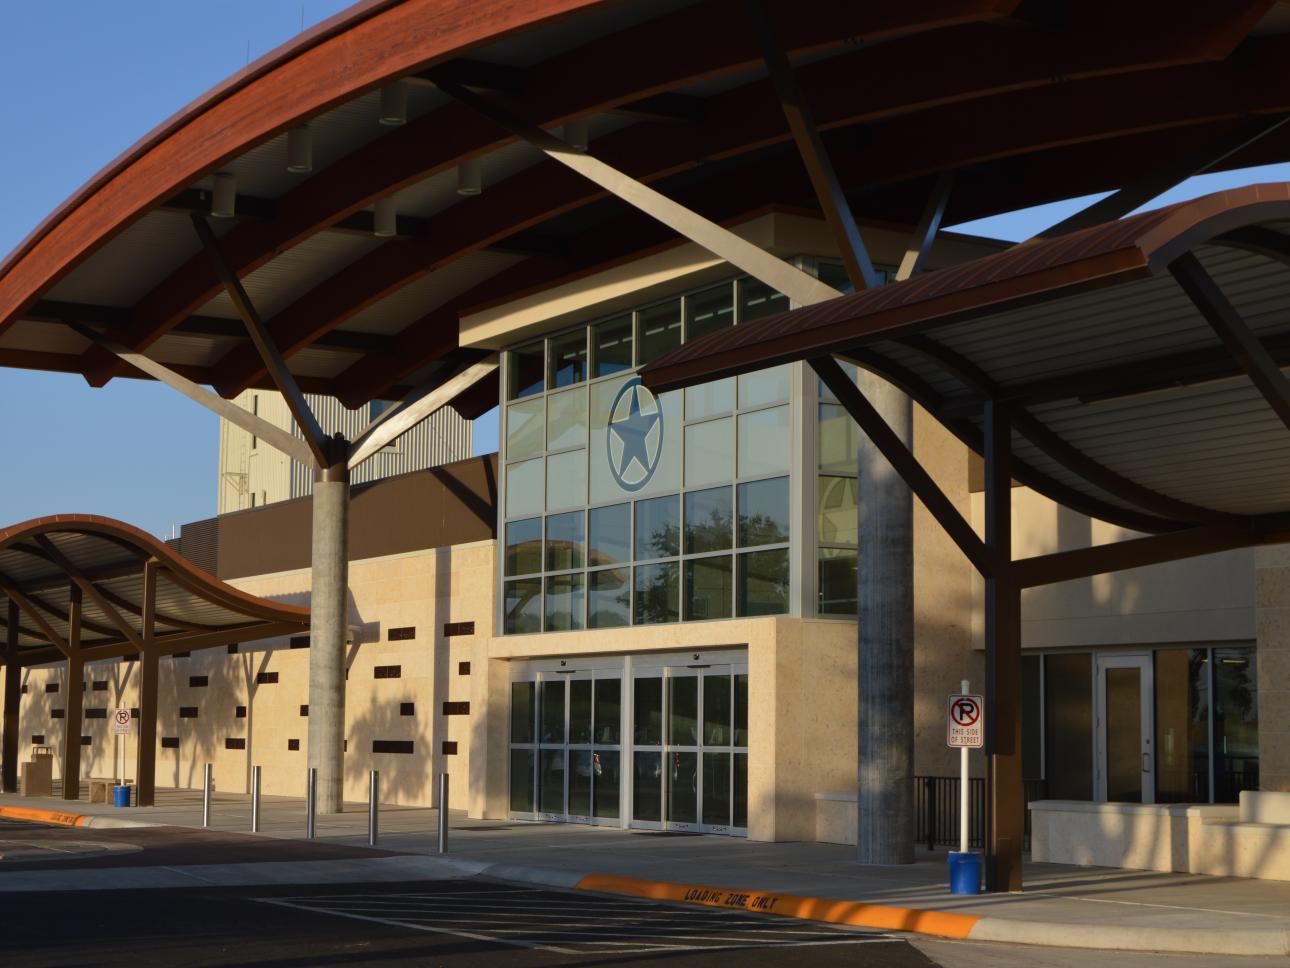  San Angelo Regional Airport Terminal Building Renovation